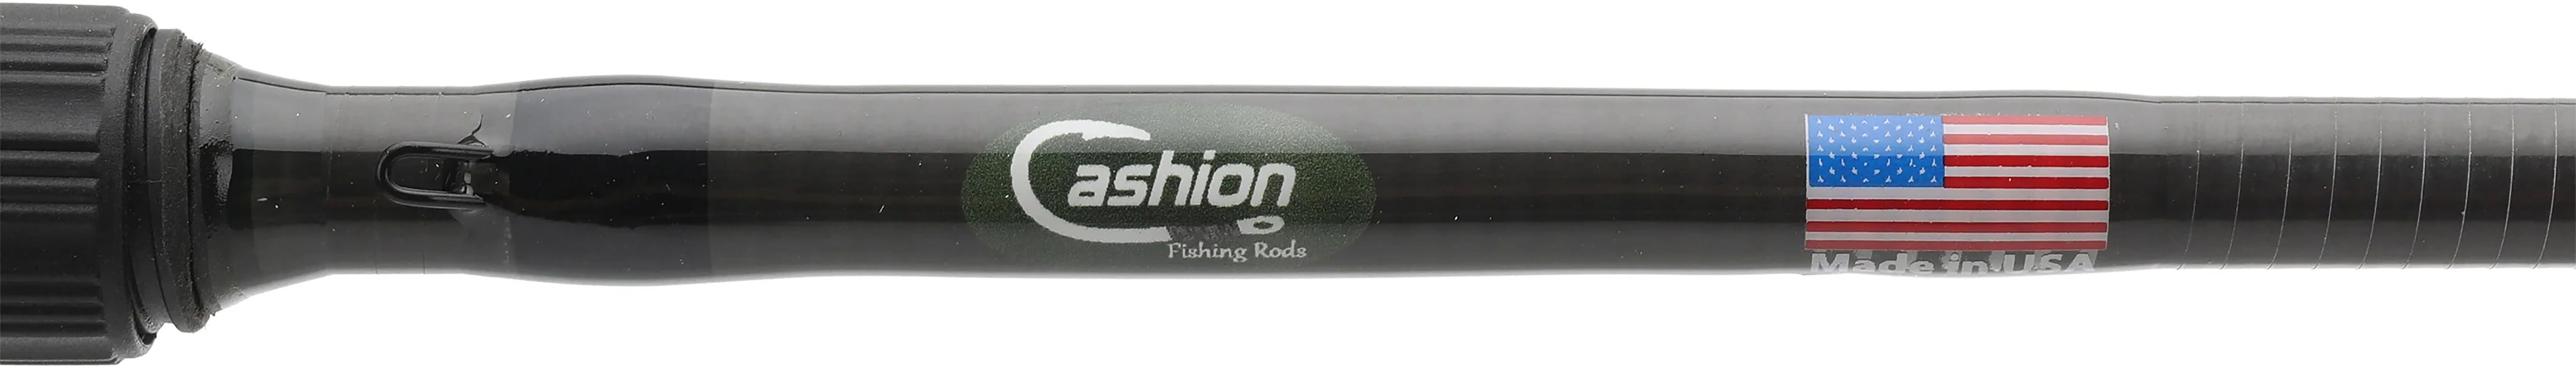 Cashion ICON Series Casting Rods